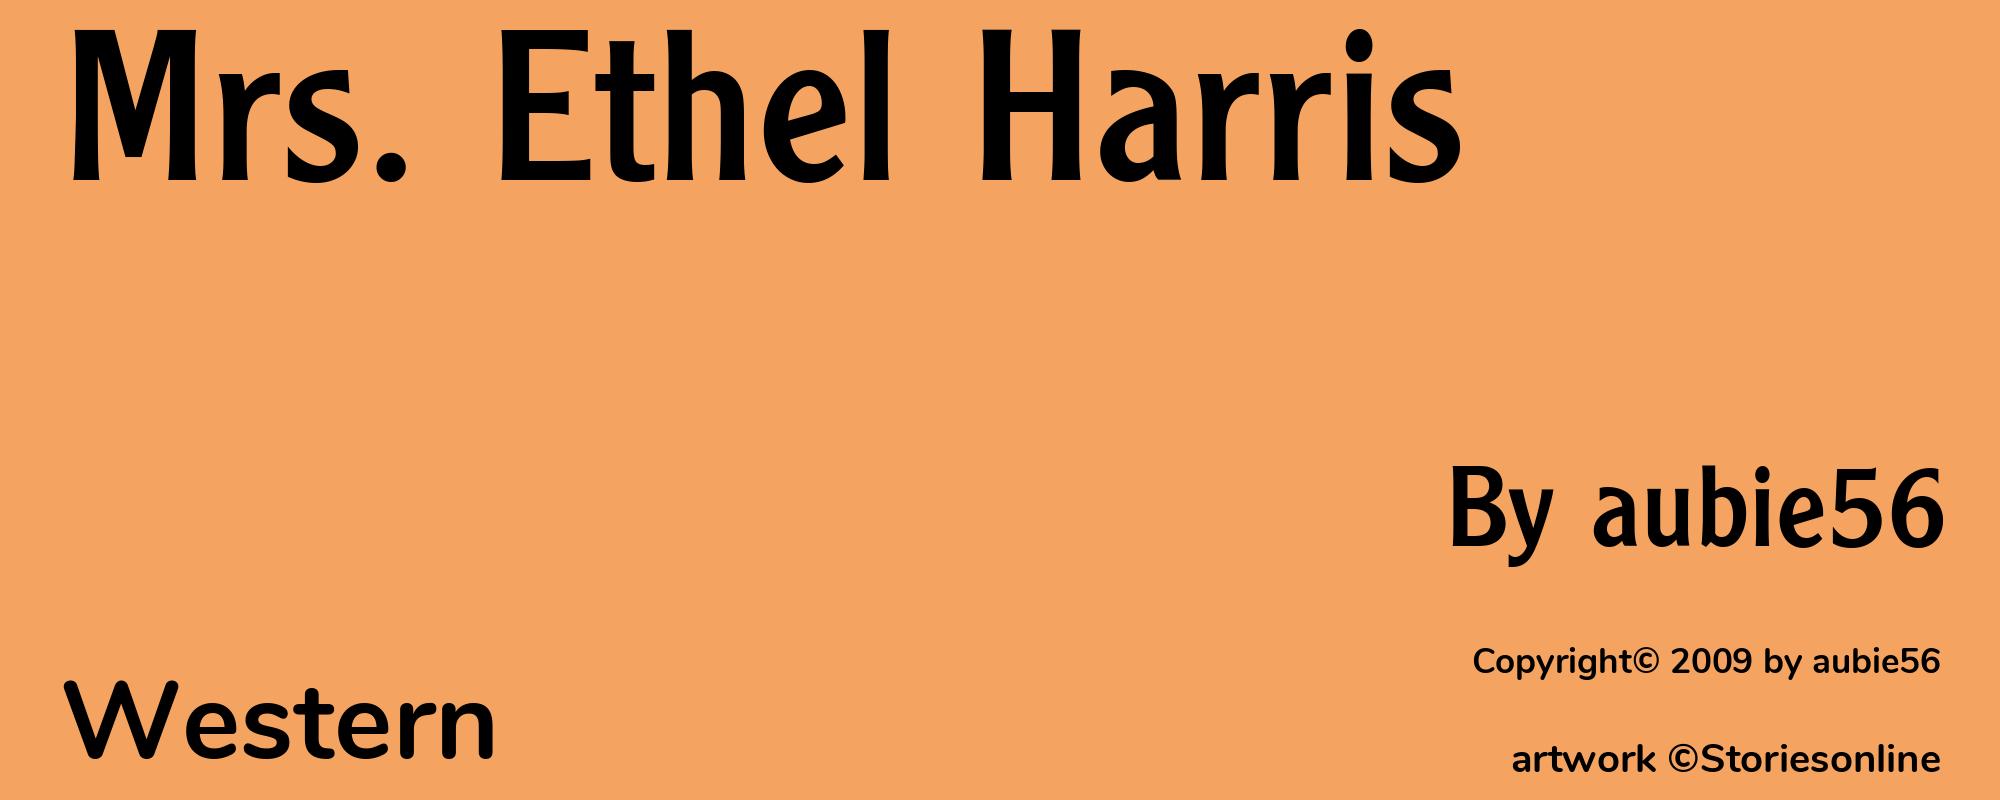 Mrs. Ethel Harris - Cover